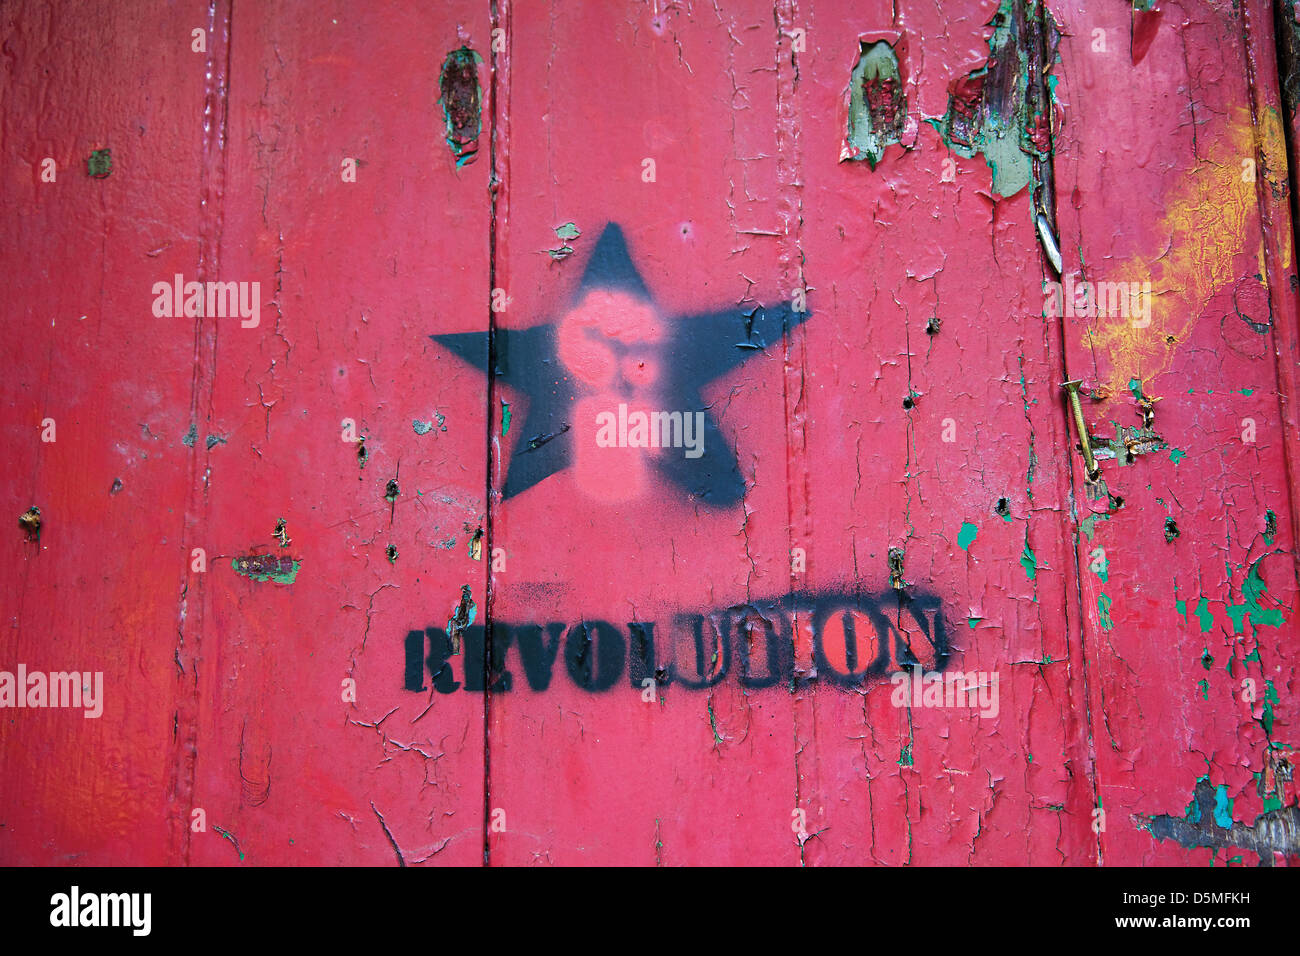 Revolution graffiti sprayed on old red door Stock Photo